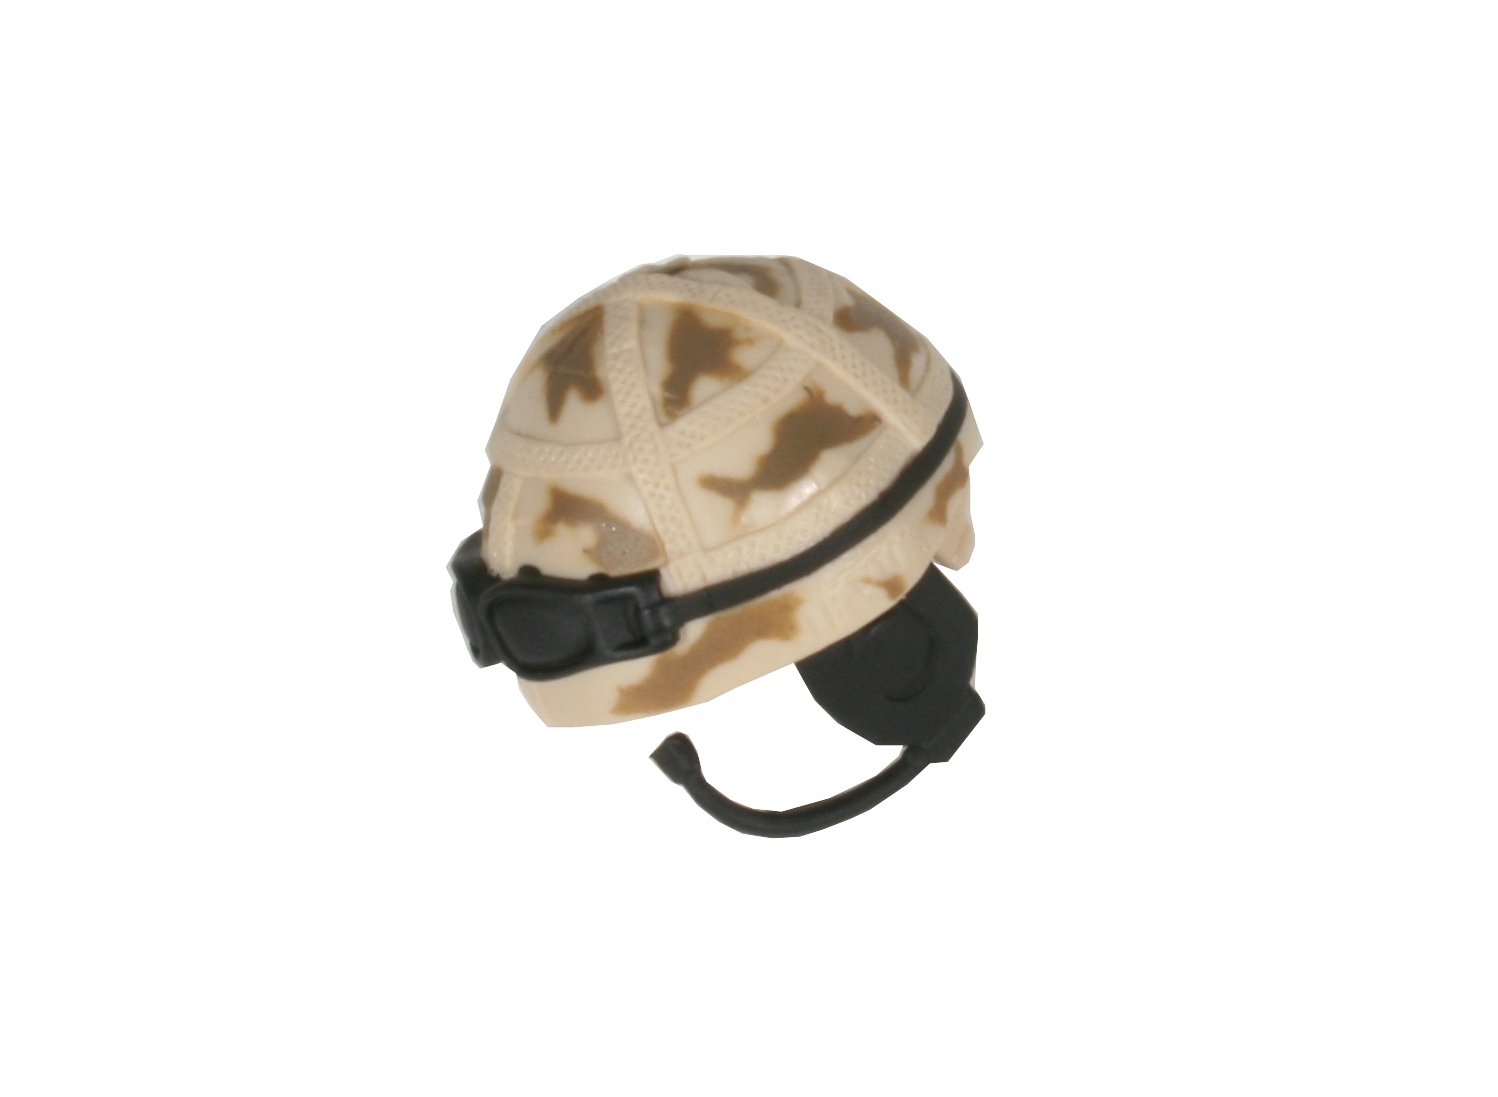 Parts - Hmaf Regiment Gunner - Helmet